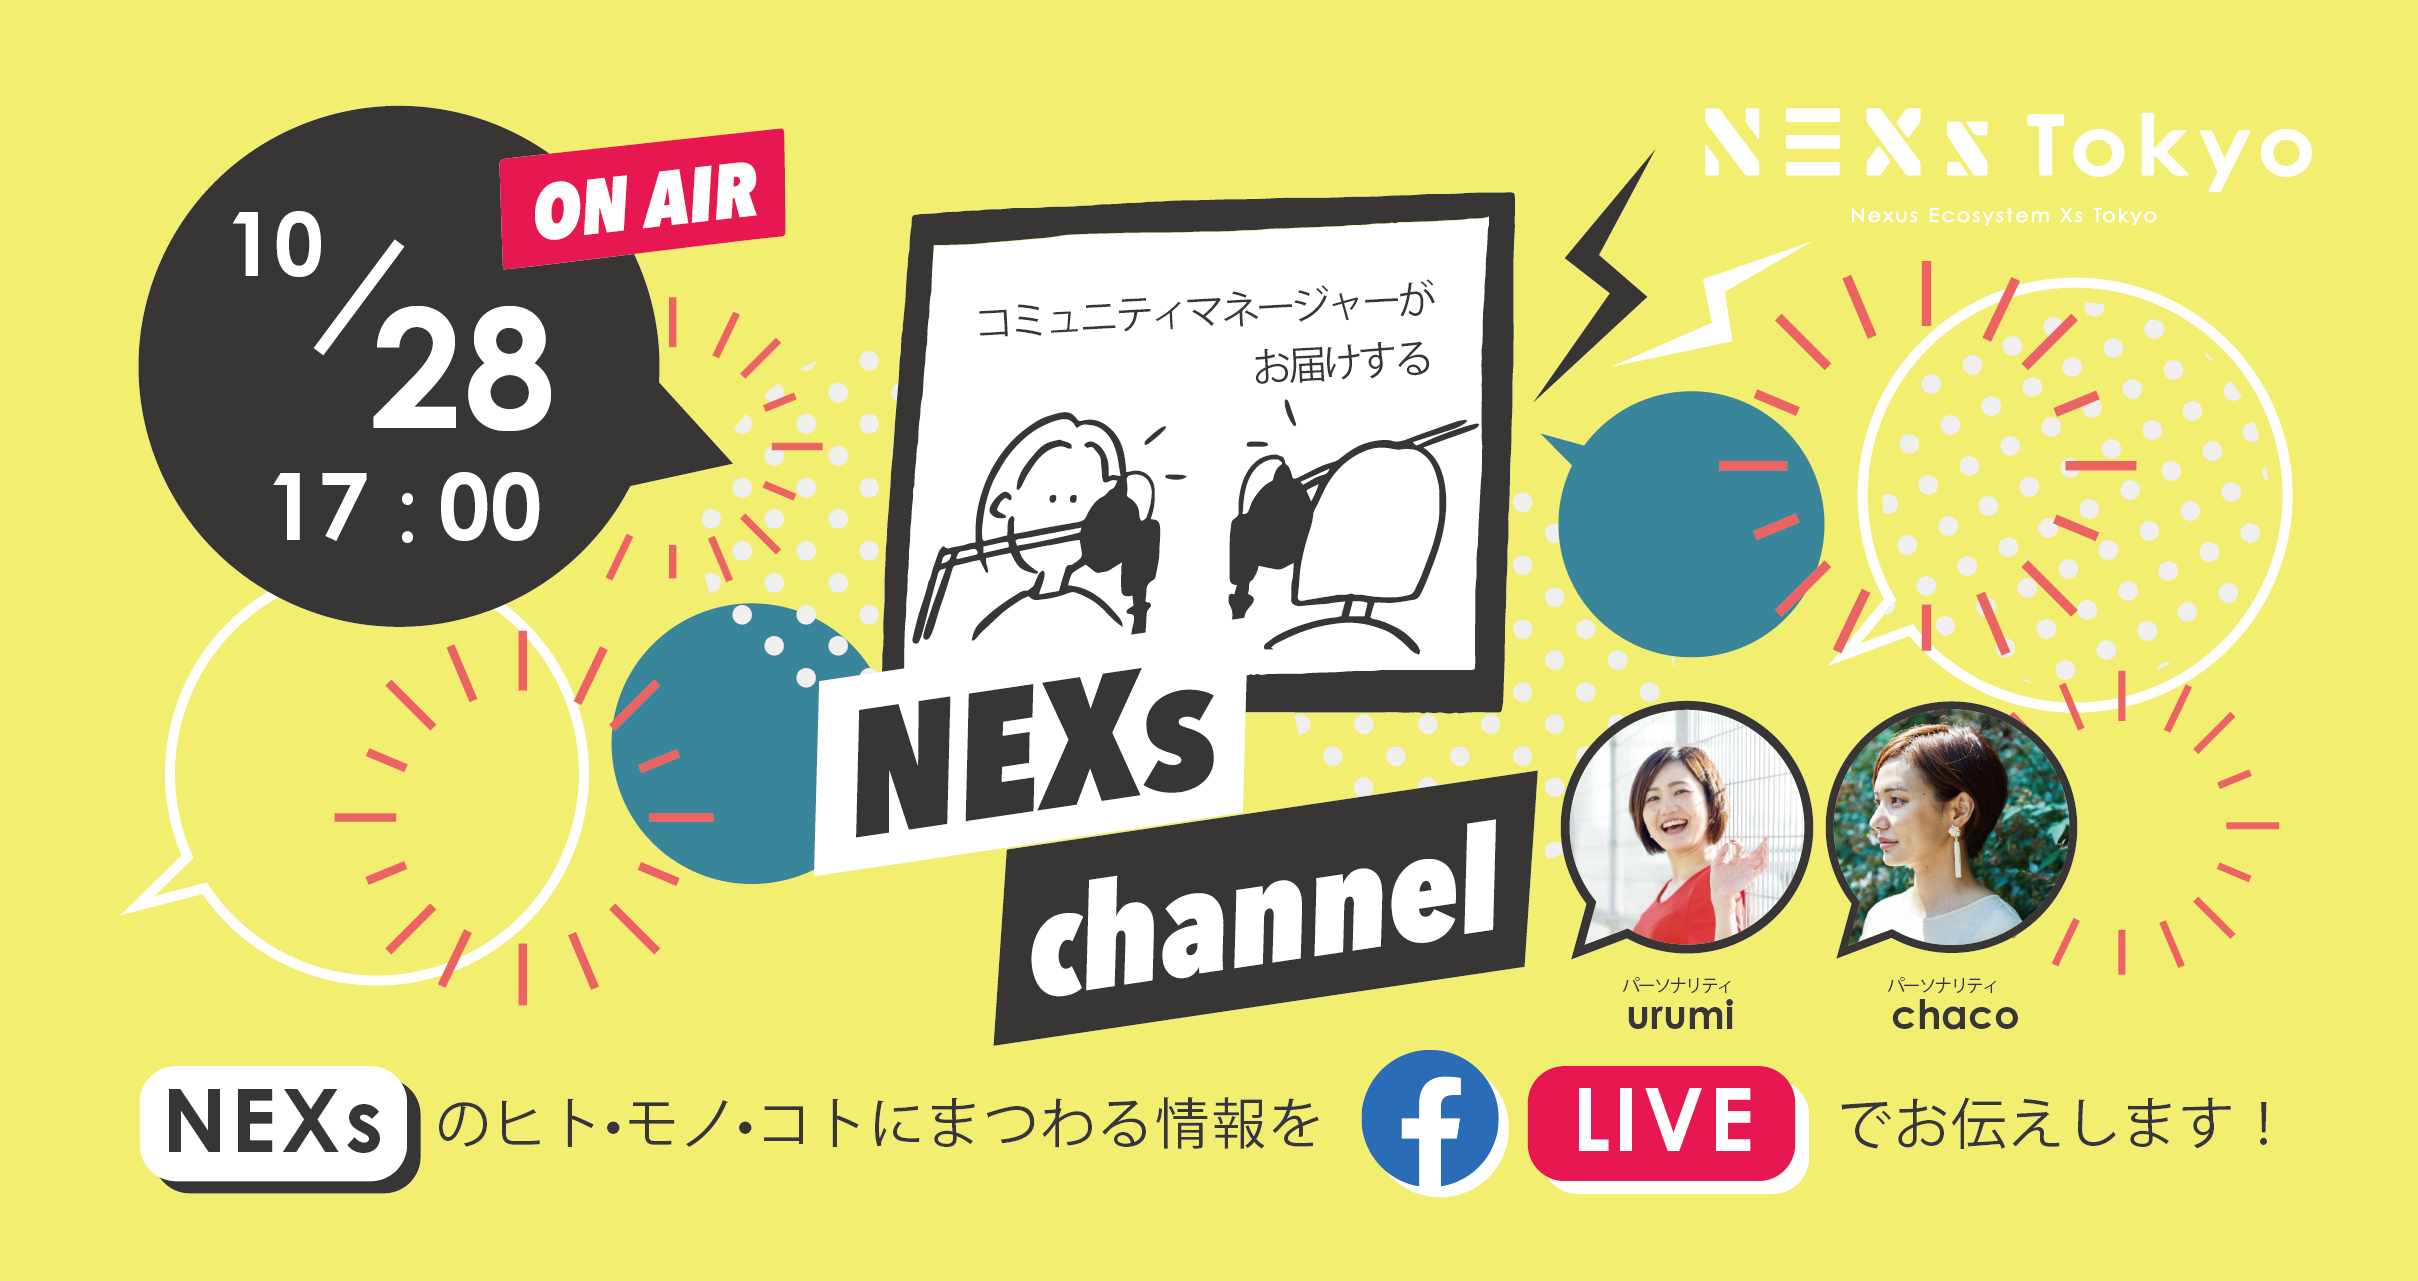 NEXs channel #10 -NEXs Tokyoのヒト・モノ・コトを特設ラジオブースから生放送でお届け！-